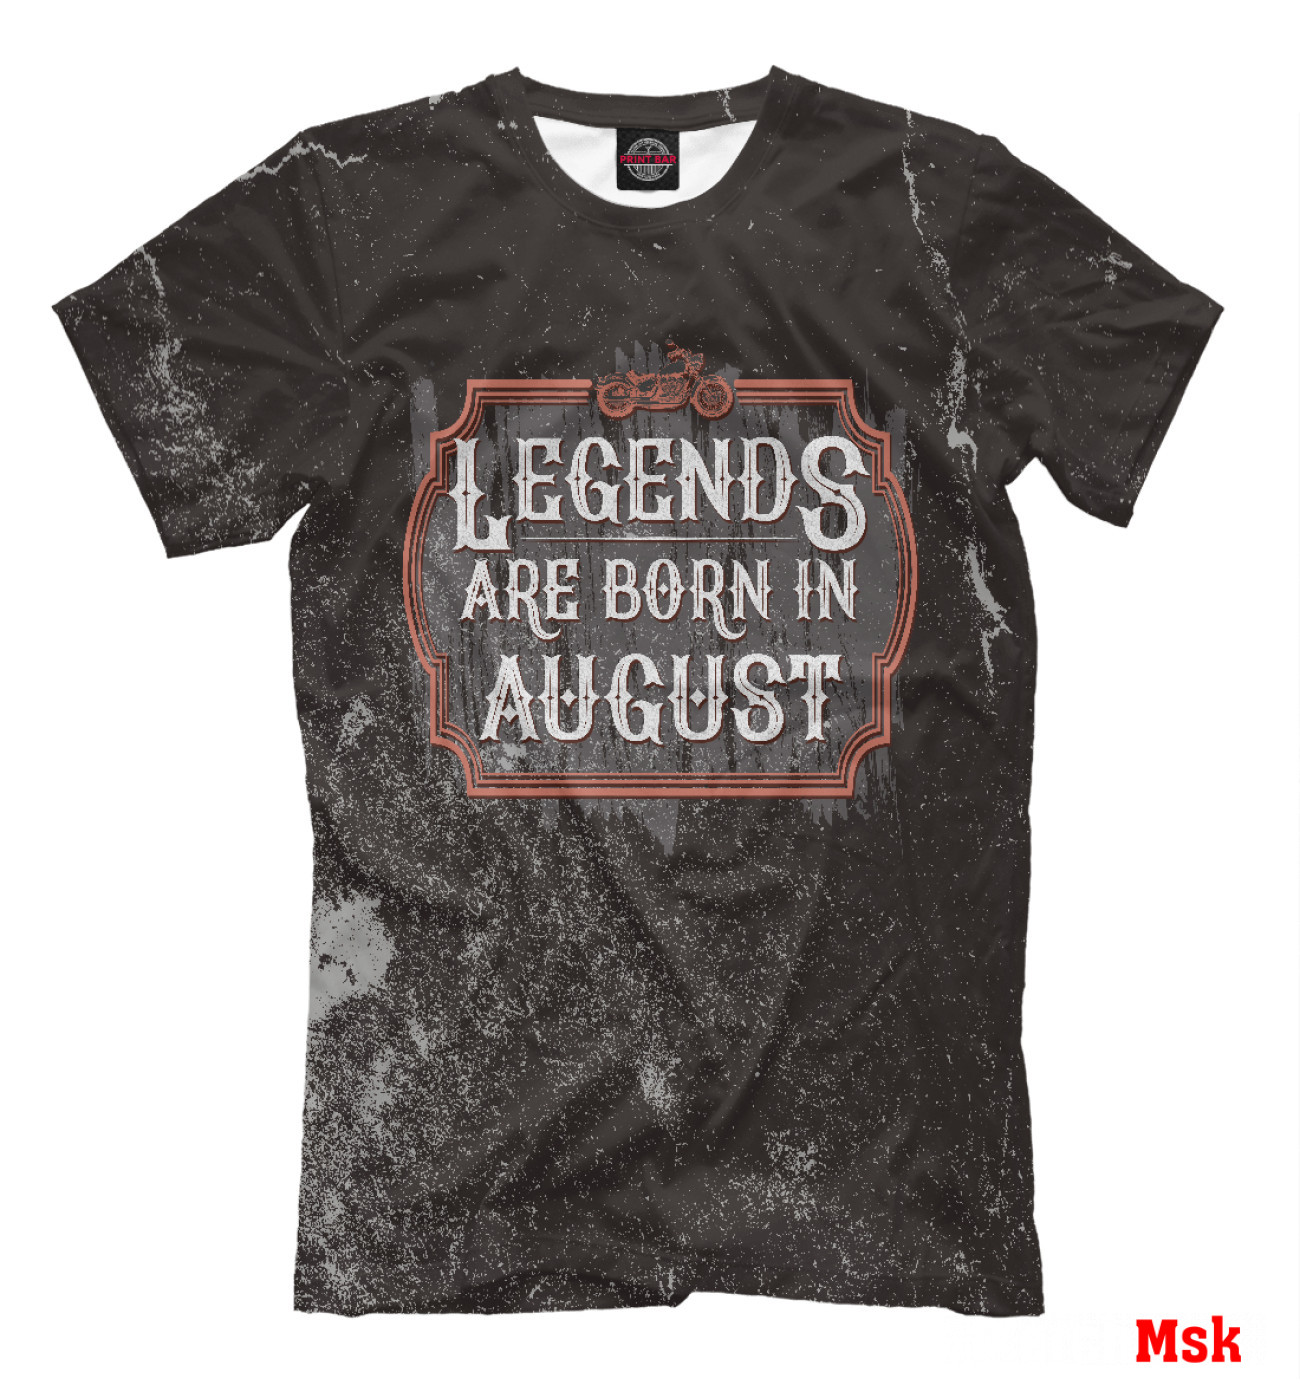 Мужская Футболка Legends Are Born In August, артикул: AUG-868672-fut-2